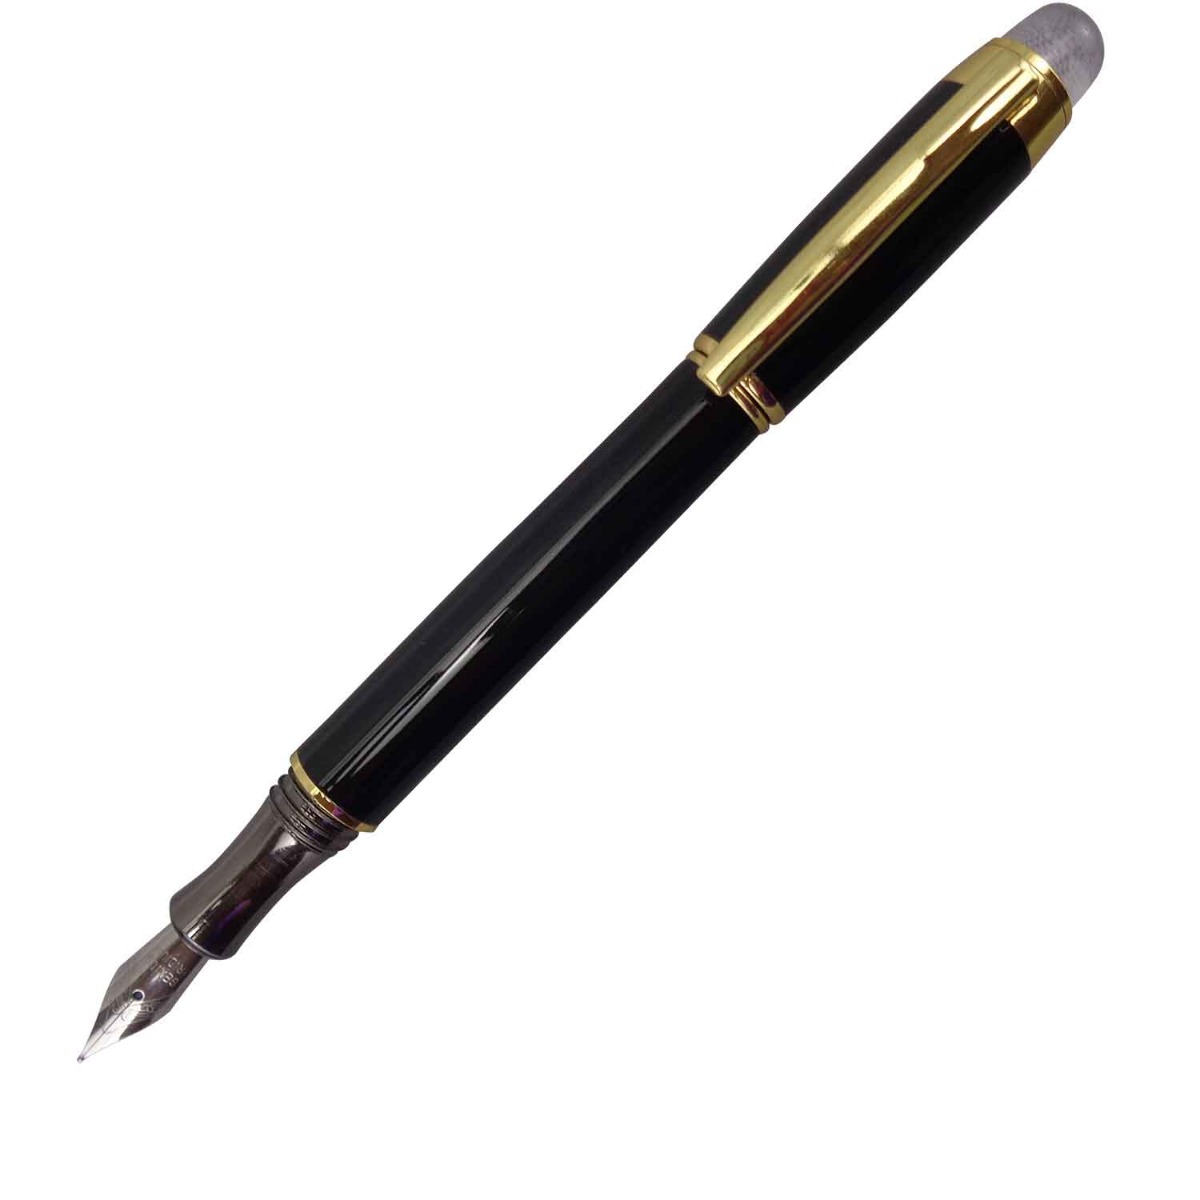 Penhouse Model:15703 Glossy Black Color Body with Gold Clip  Thread Cap Medium Nib Fountain Pen